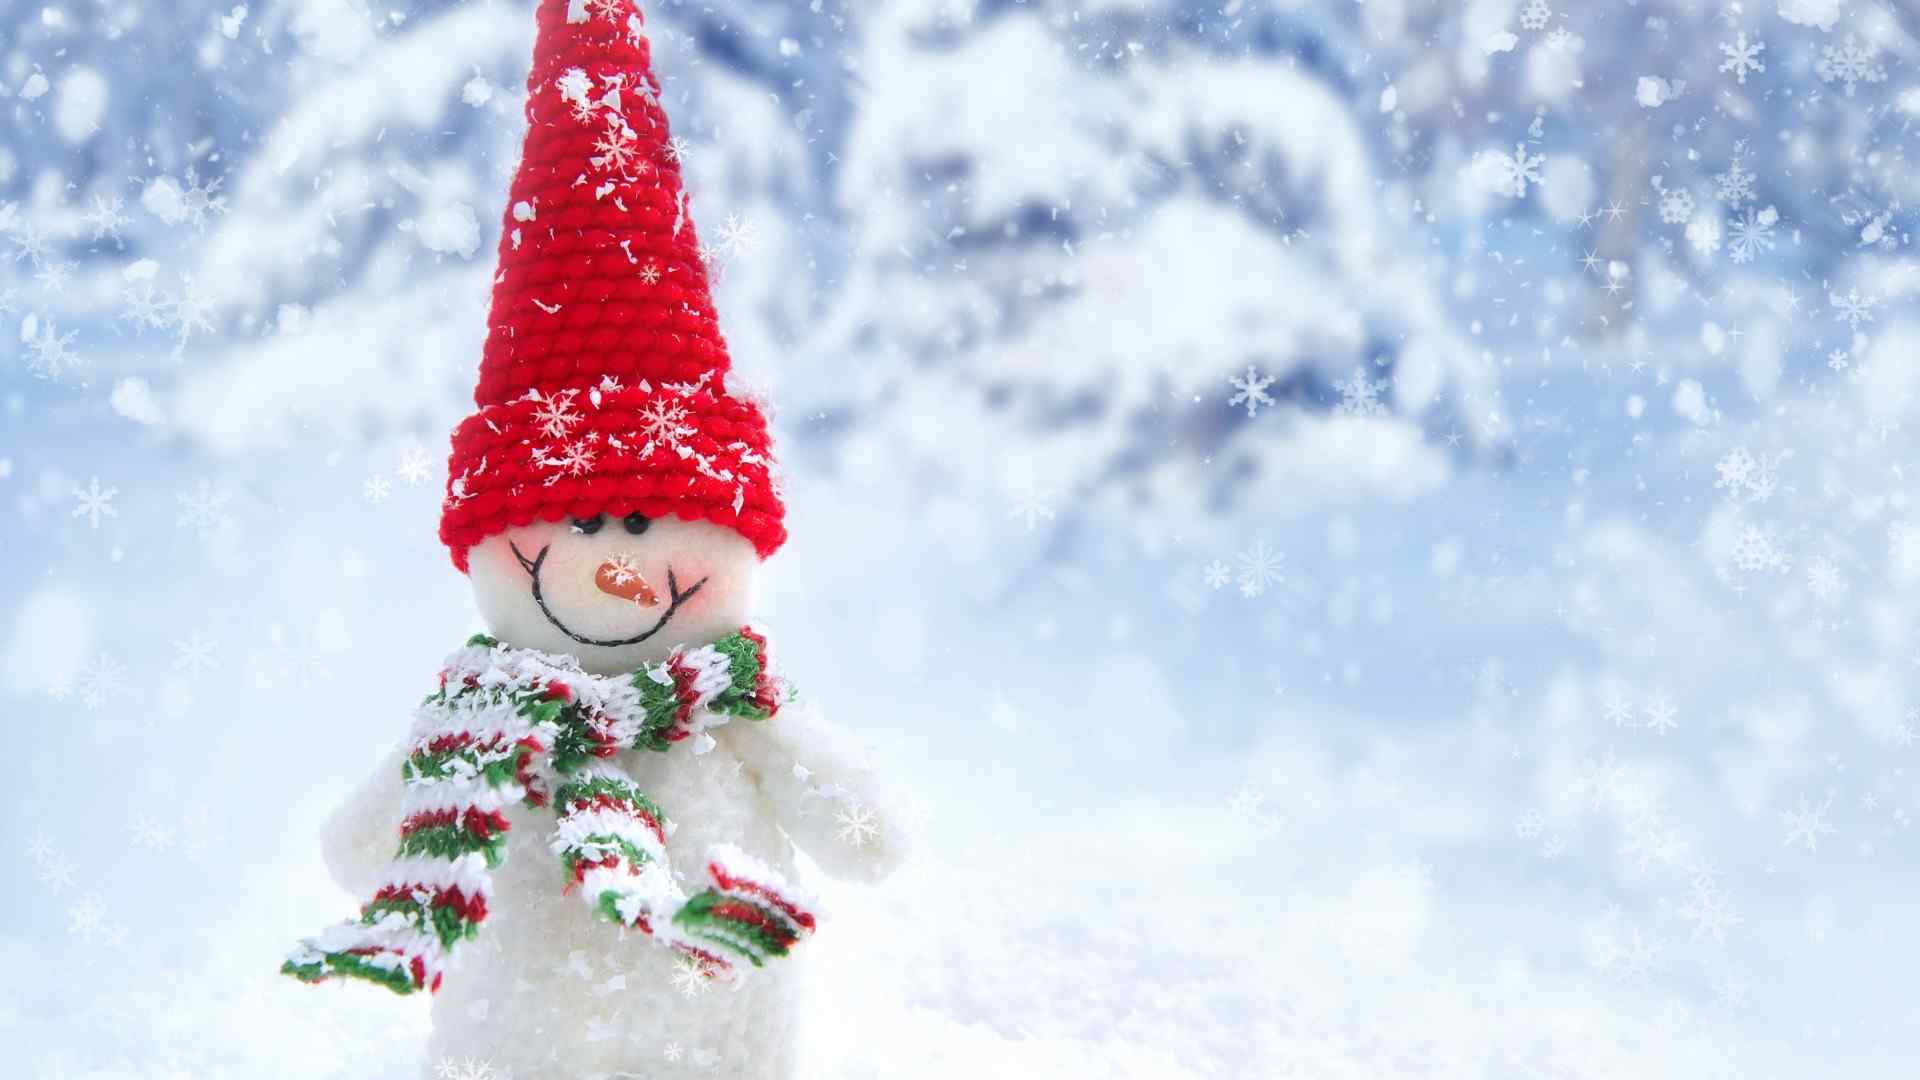 3D圣诞小雪人图片素材-编号09030870-图行天下